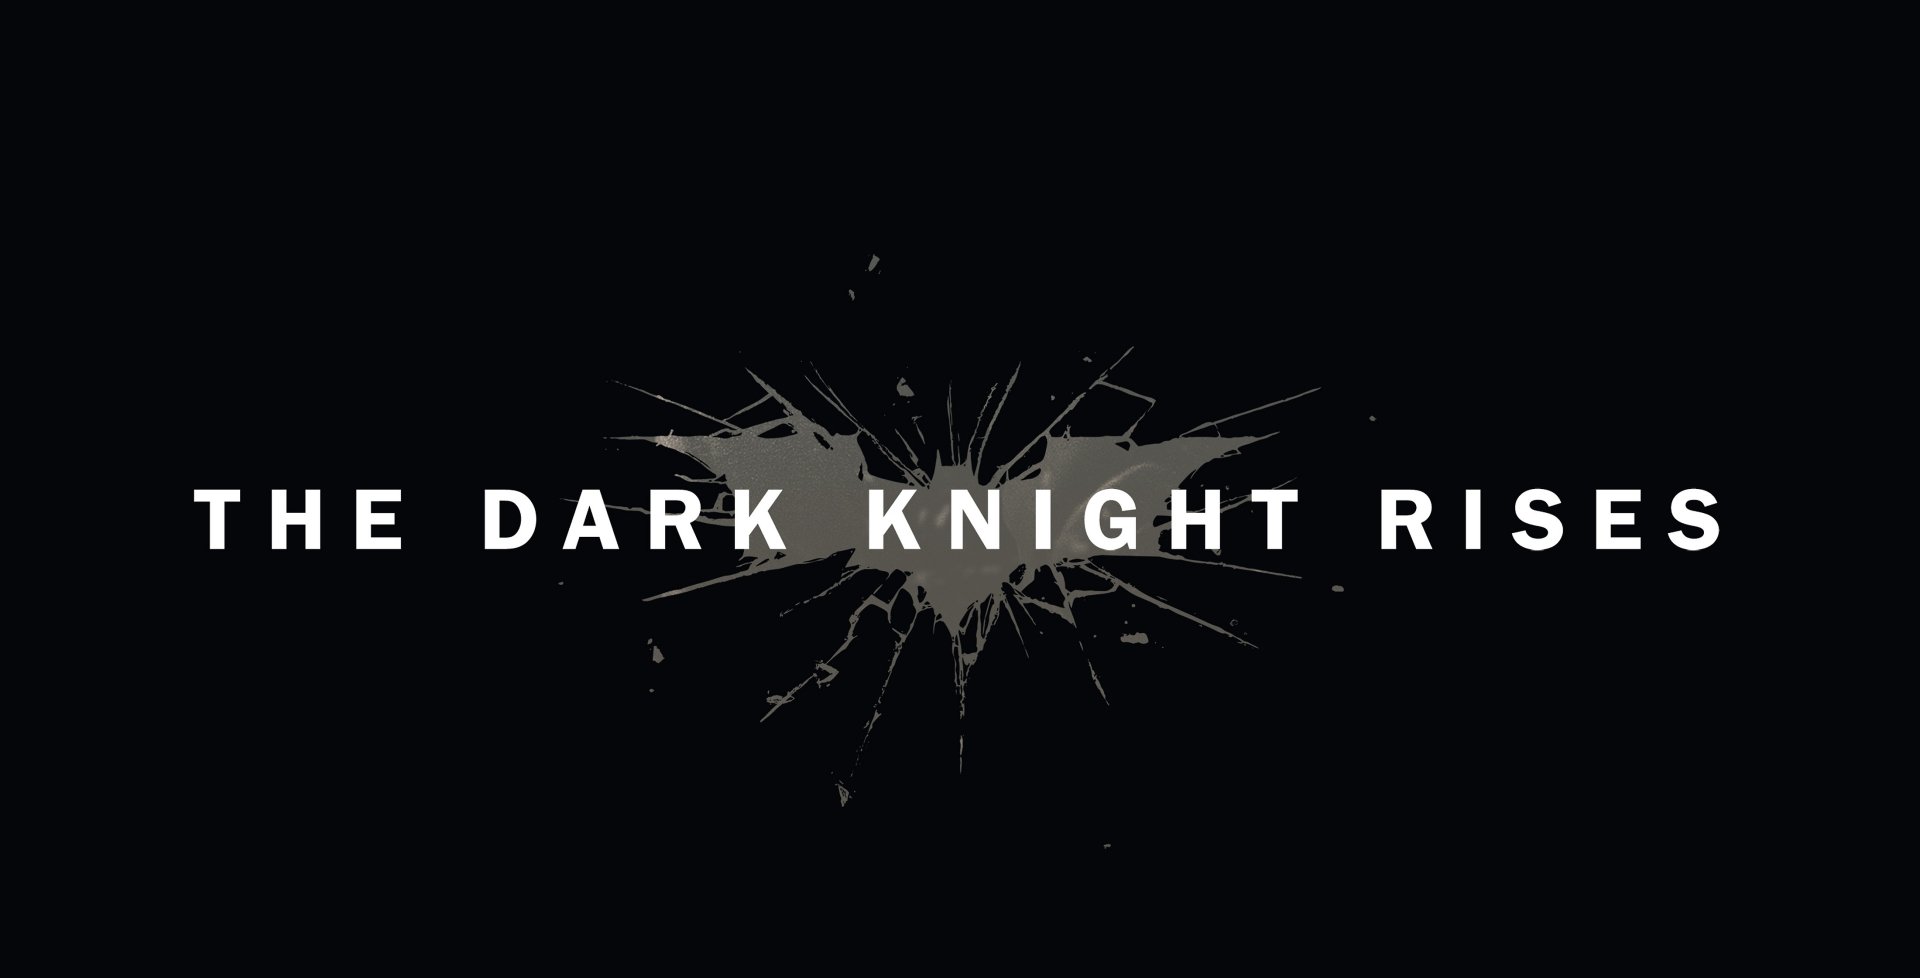 The Dark Knight Rises 4k Ultra HD Wallpaper | Background Image | 4400x2242